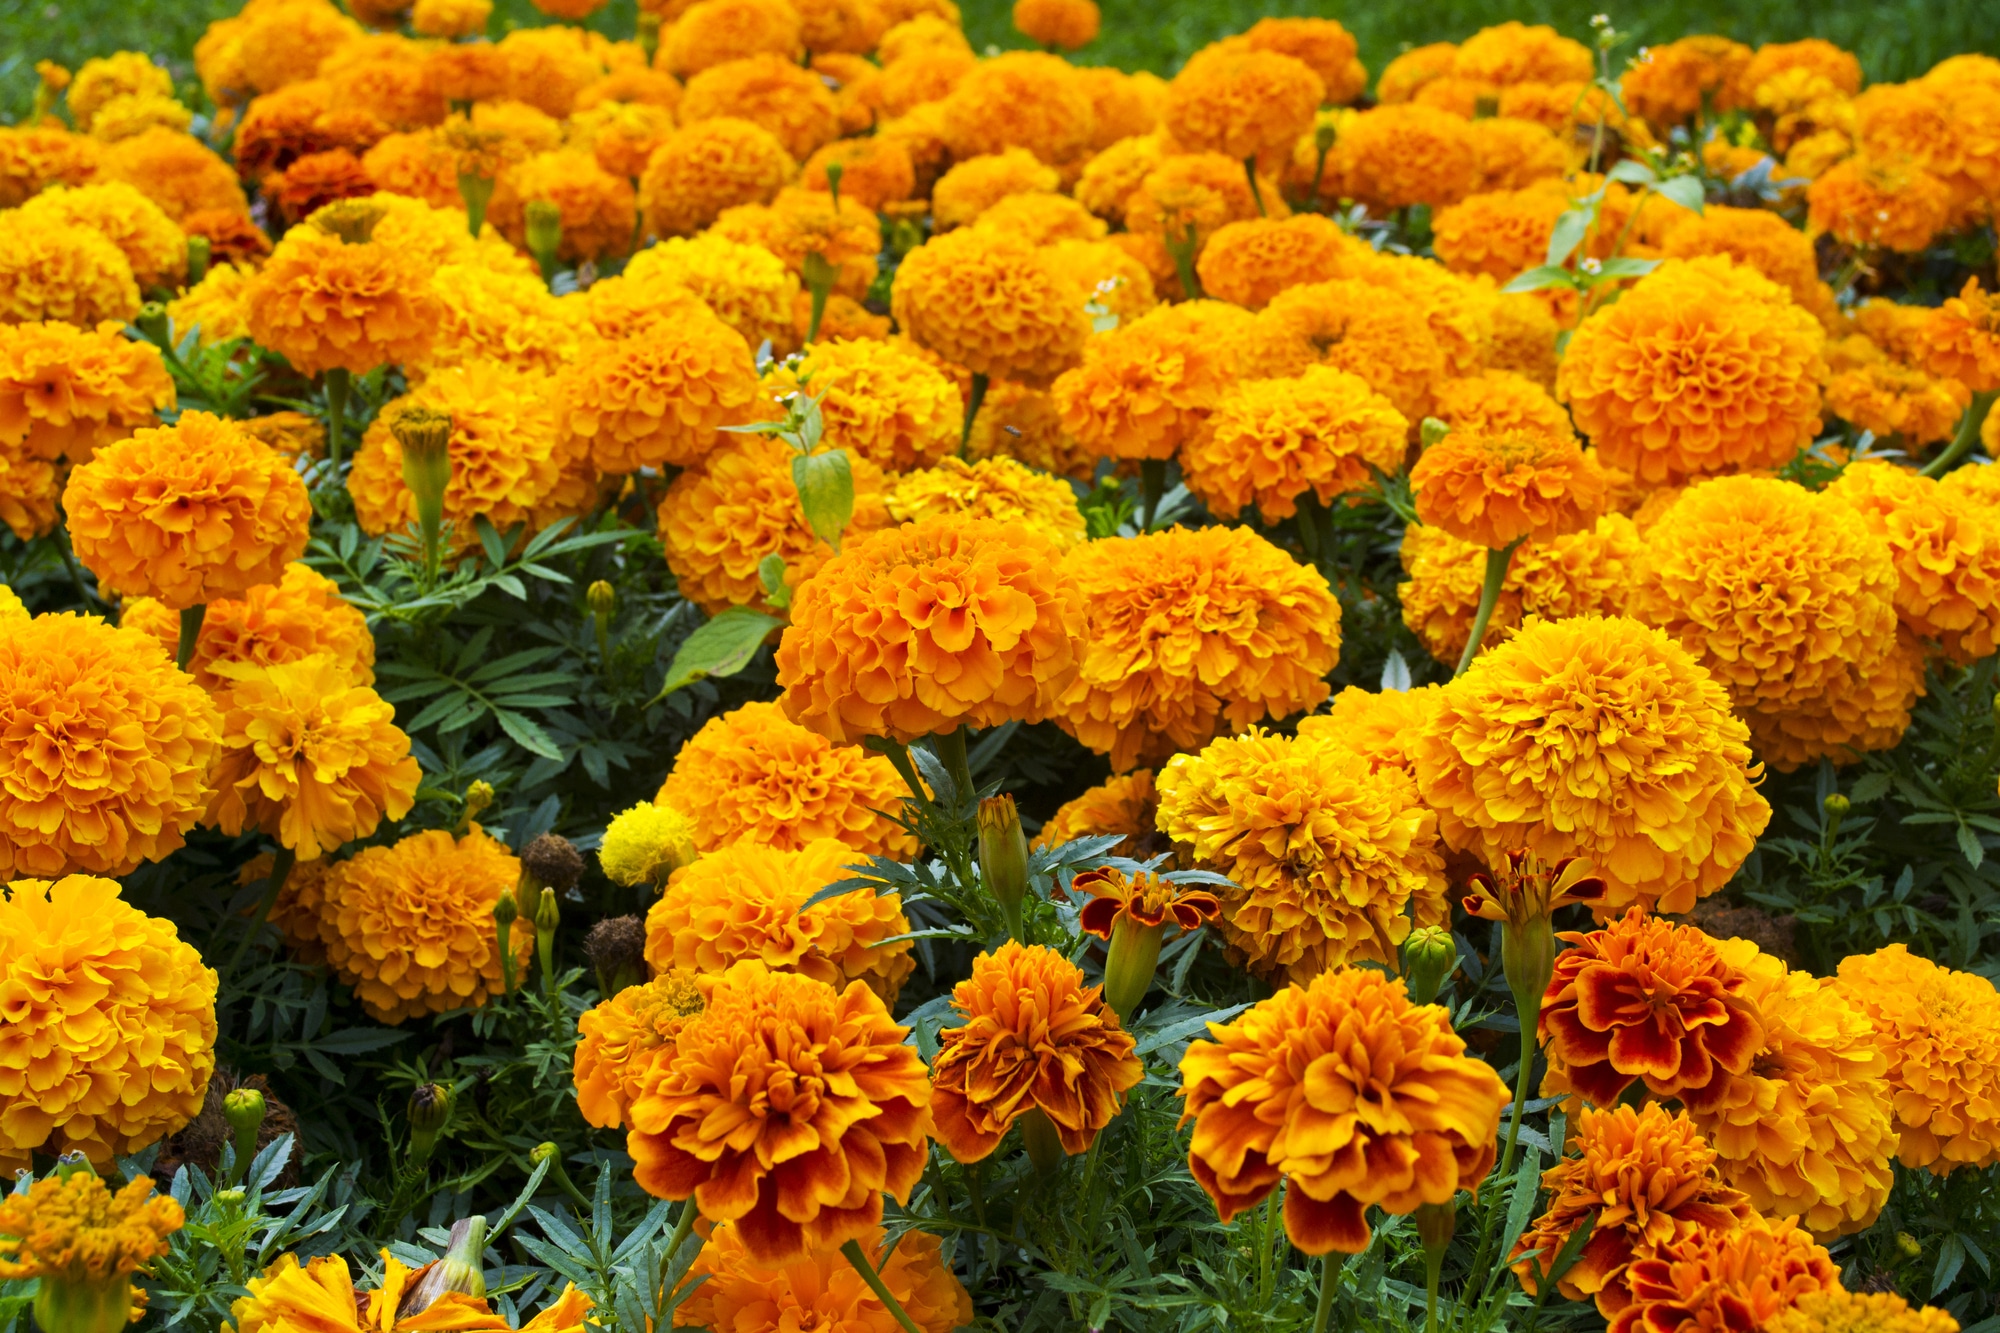 Flowerbed of orange marigolds